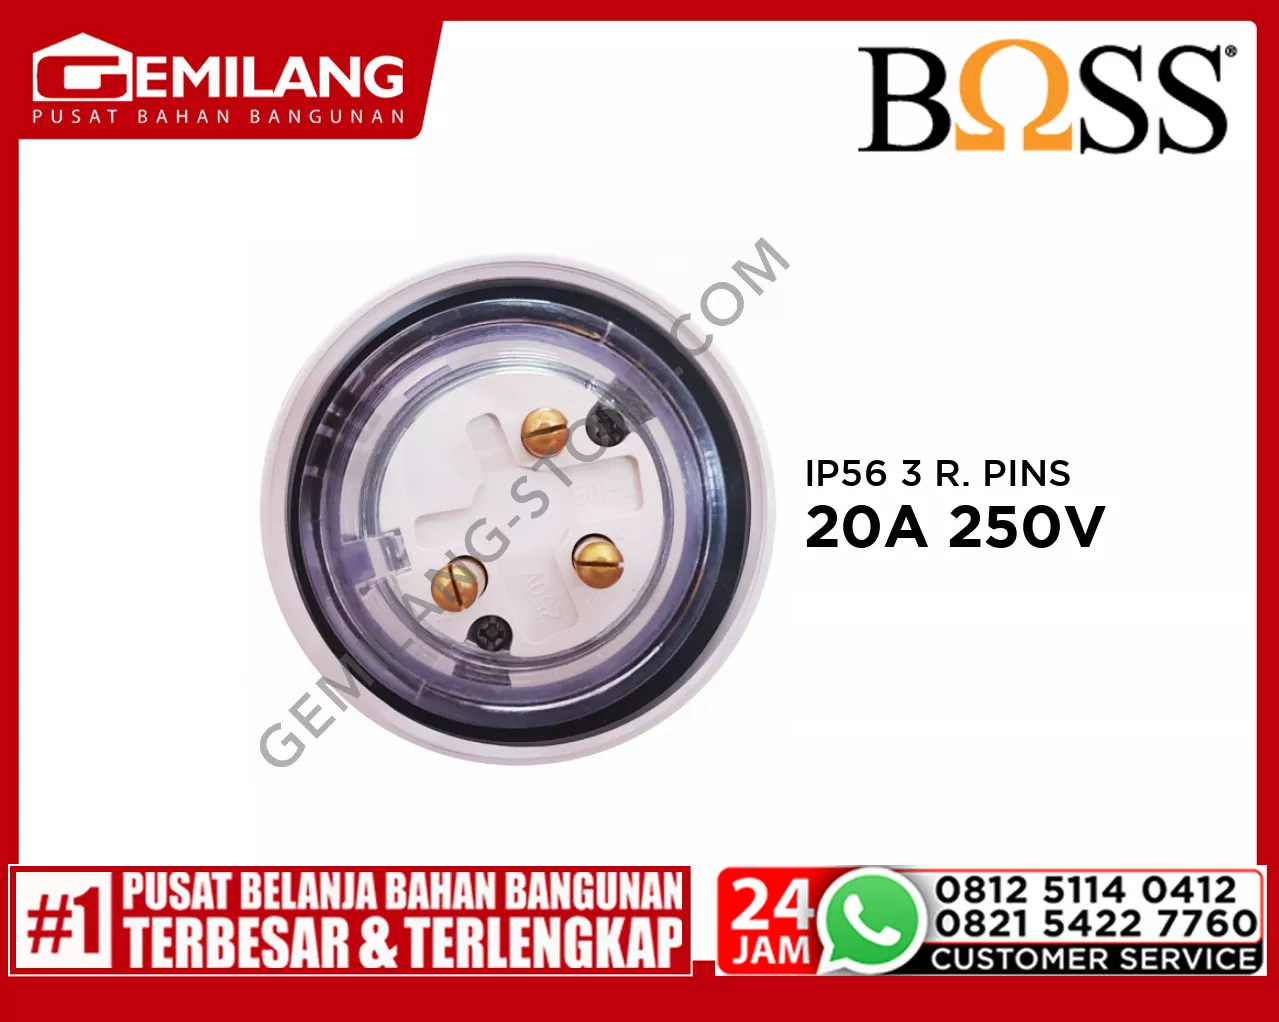 BOSS IP56 3 ROUND PINS 20A 250V B56P320